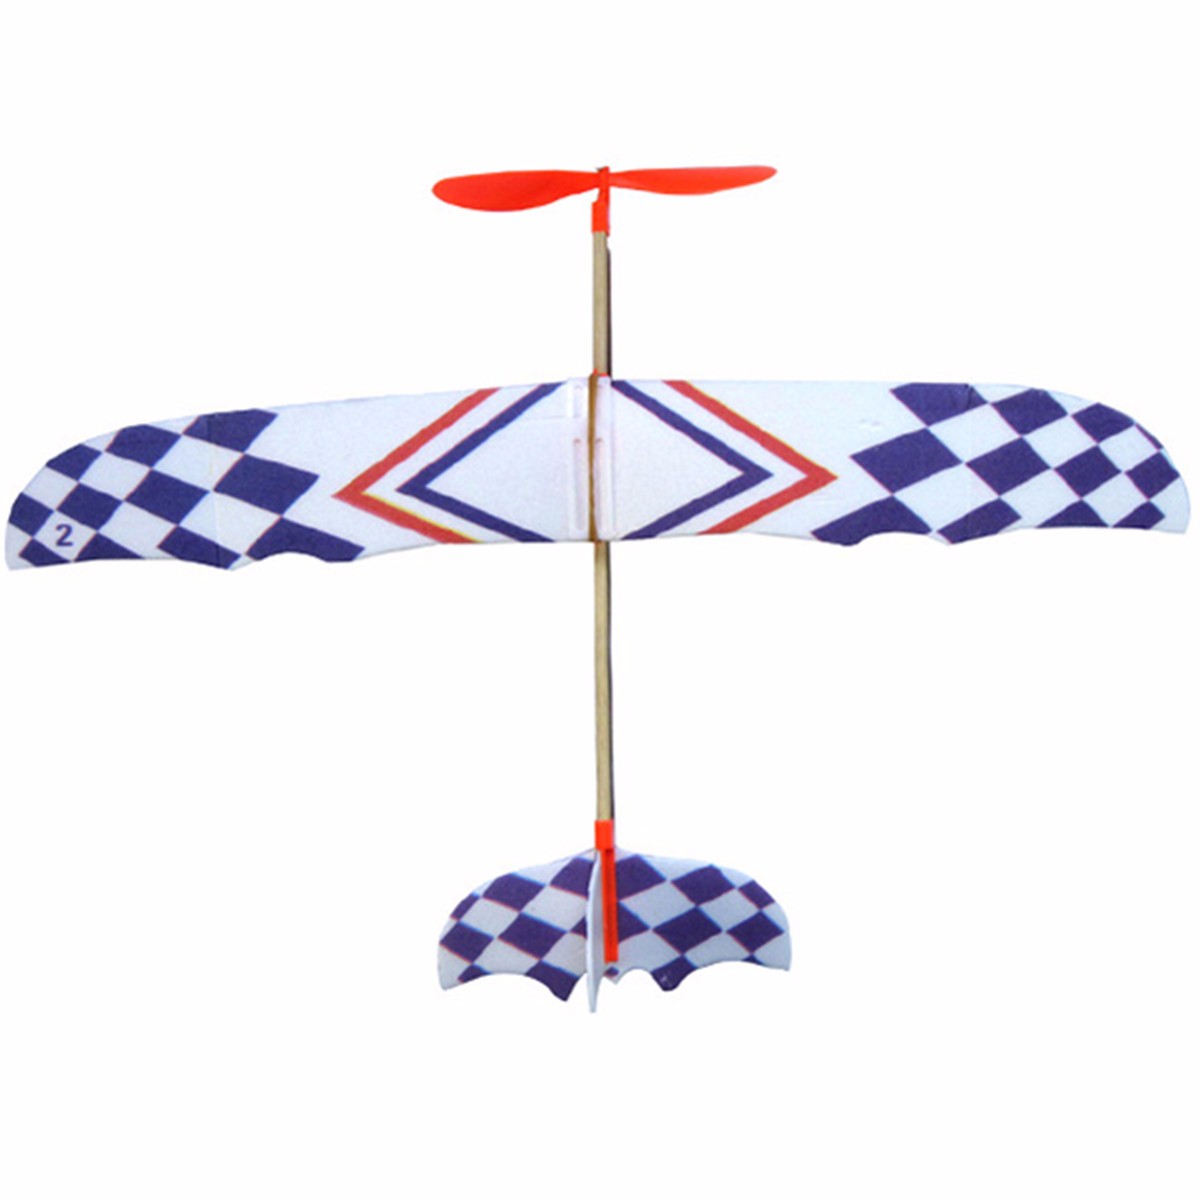 10-PCS-DIY-Foam-Elastic-Powered-Glider-Plane-Toy-Thunderbird-Flying-Model-Aircraft-Toy-1349740